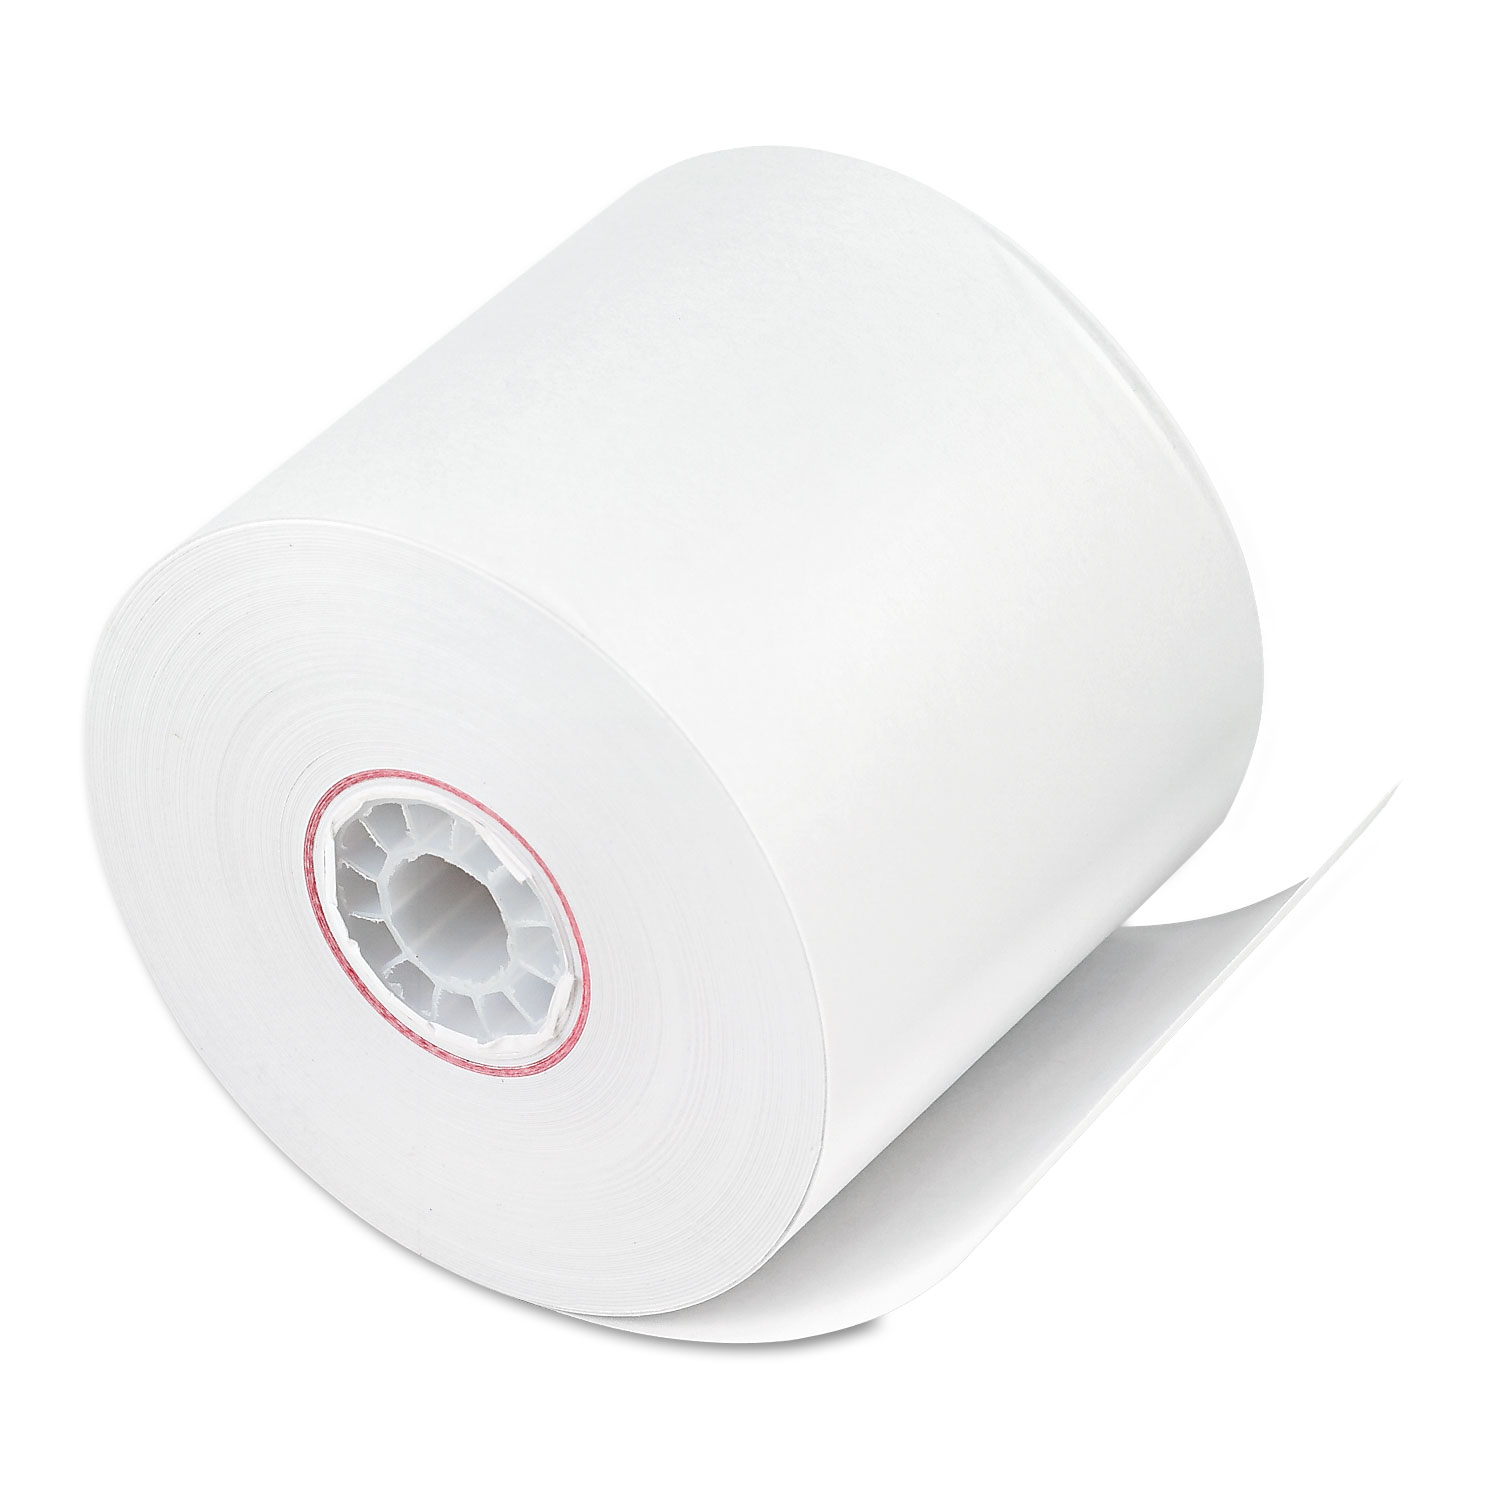  Iconex 8677 Impact Bond Paper Rolls, 2.25 x 150 ft, White, 100/Carton (ICX90740510) 